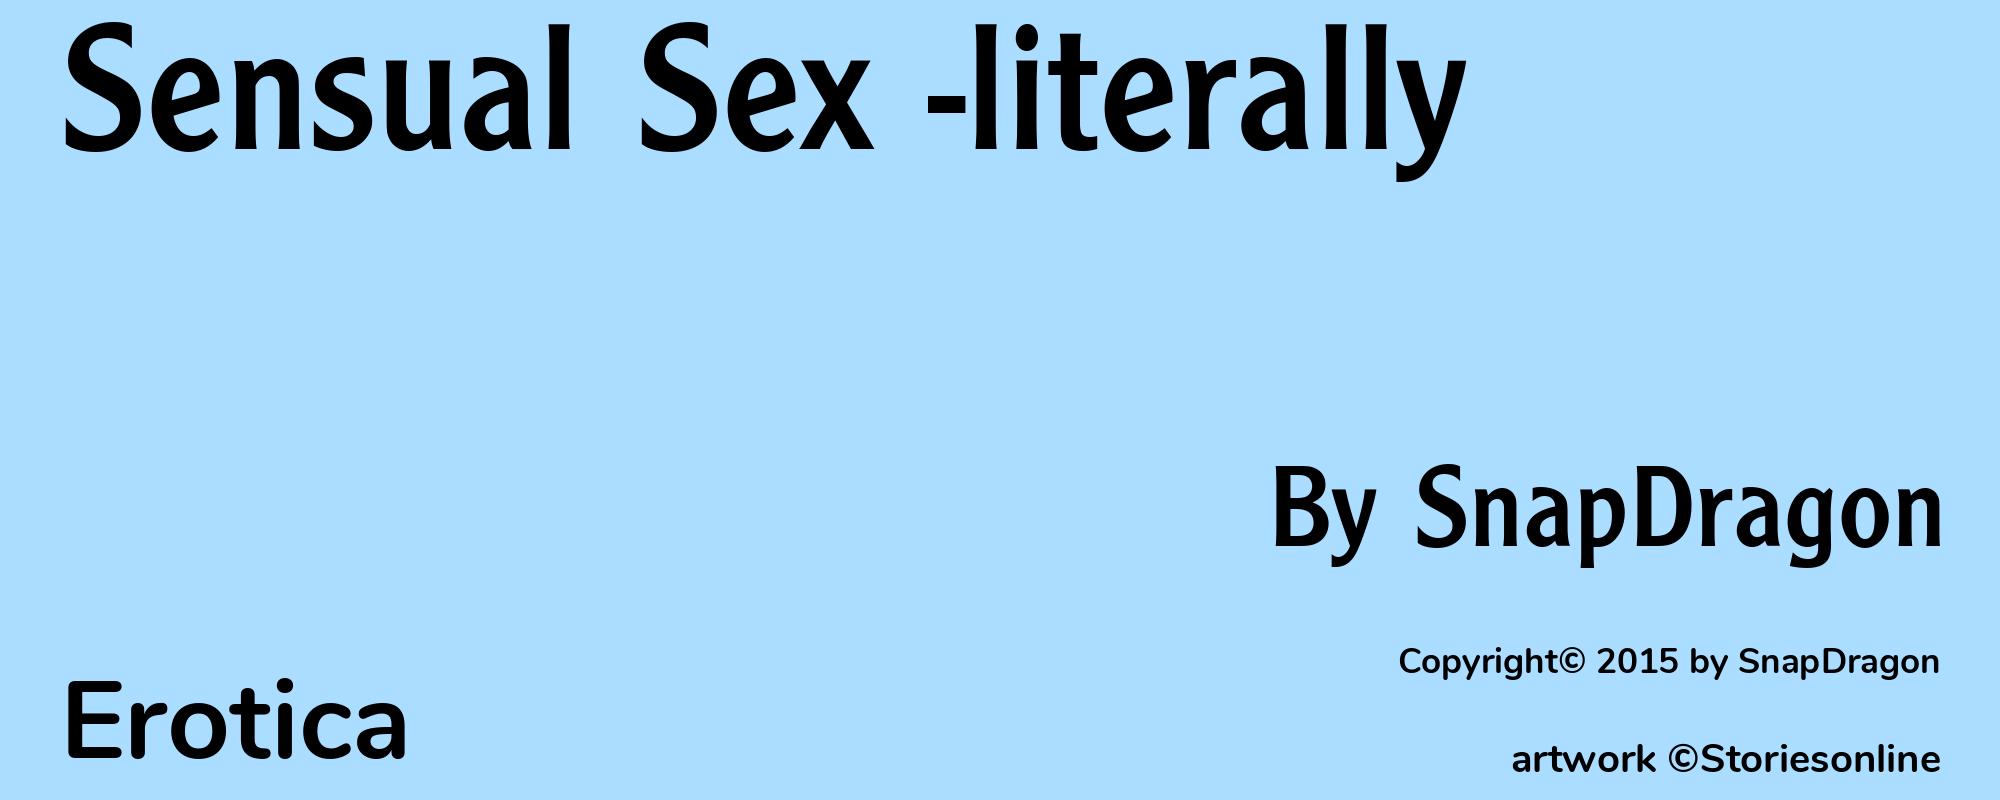 Sensual Sex -literally - Cover